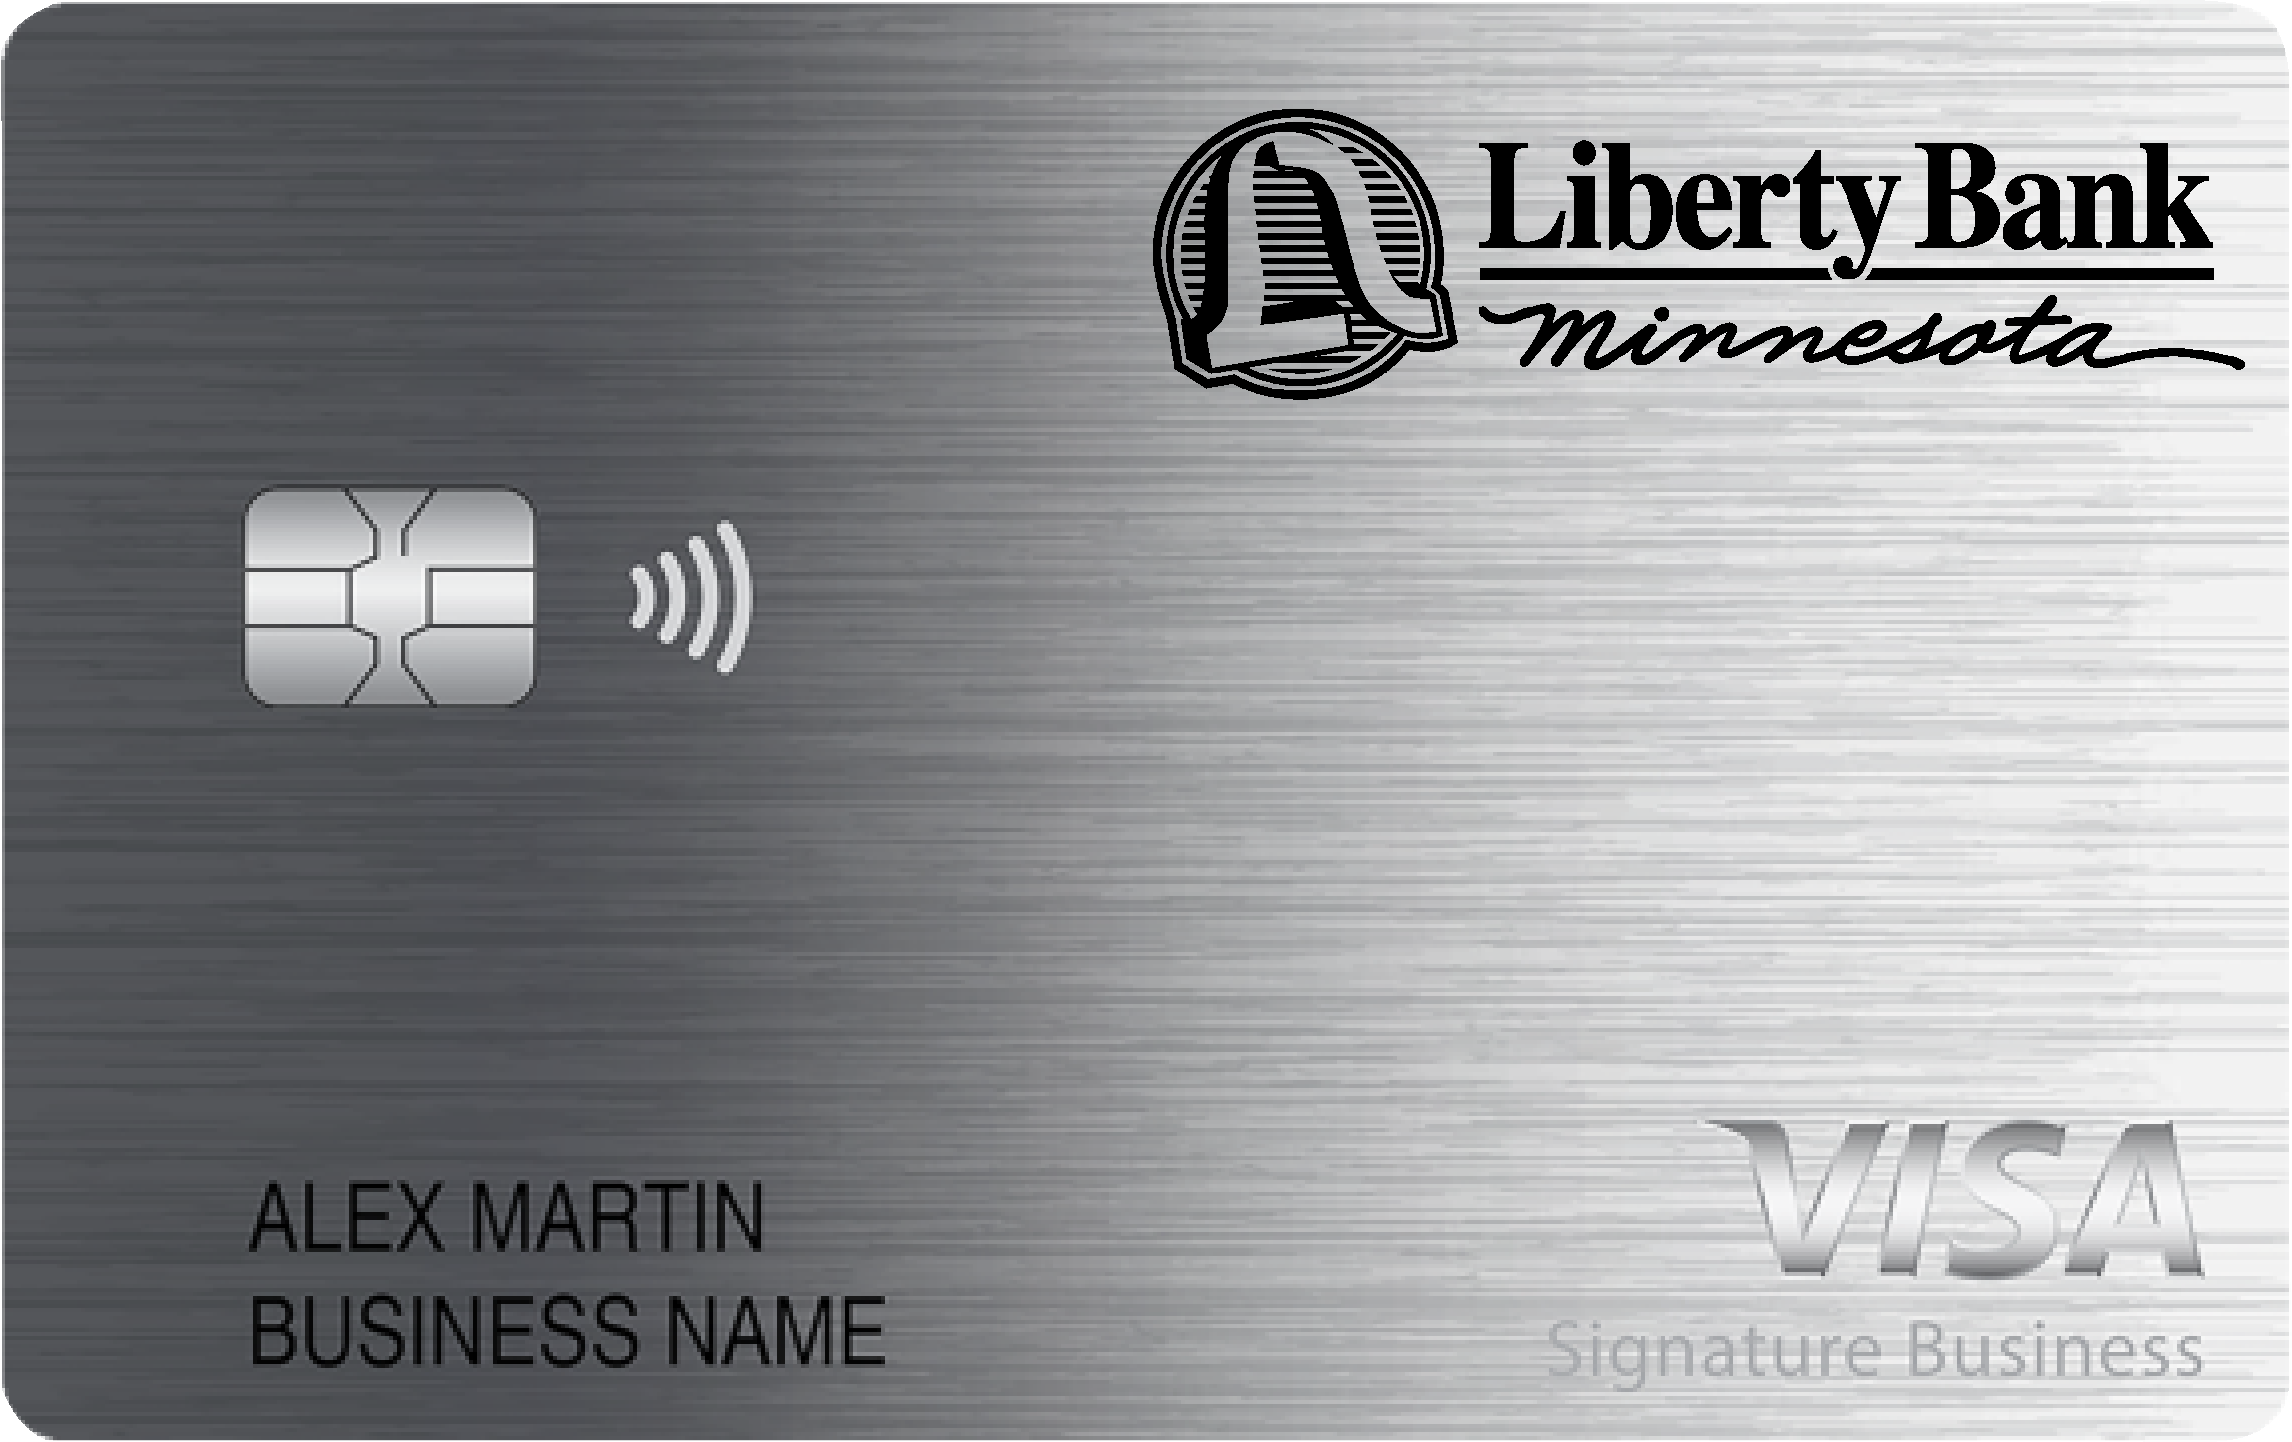 Liberty Bank Minnesota Smart Business Rewards Card